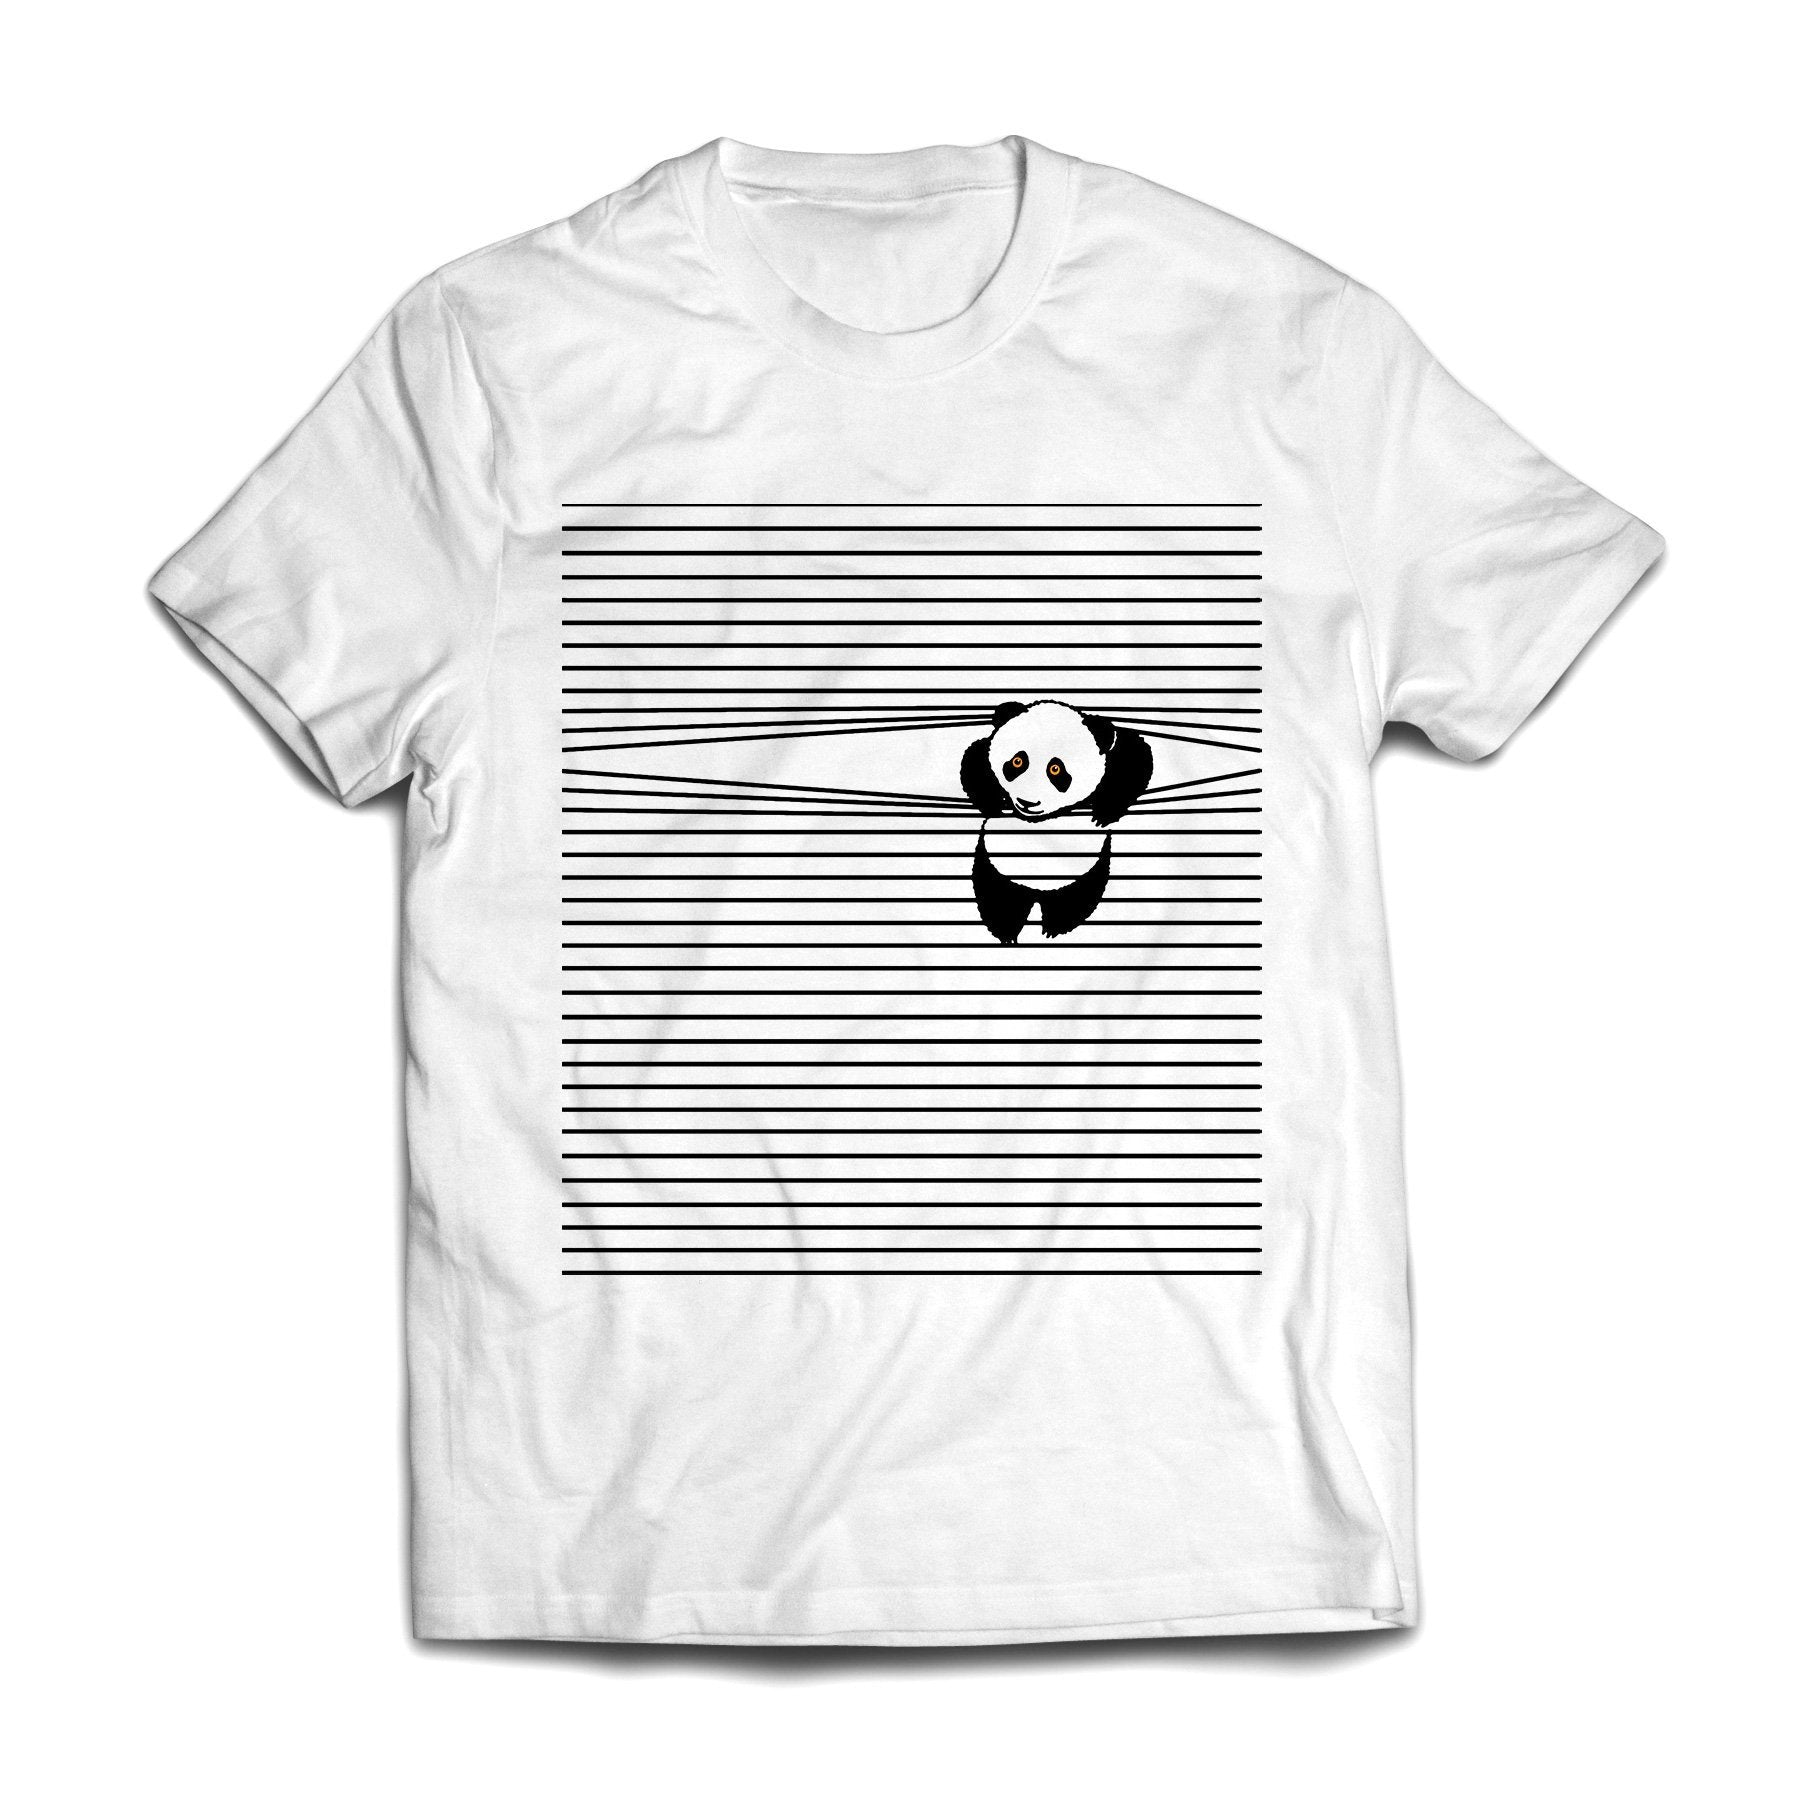 Little Panda Unisex T-shirt - Happiness Idea